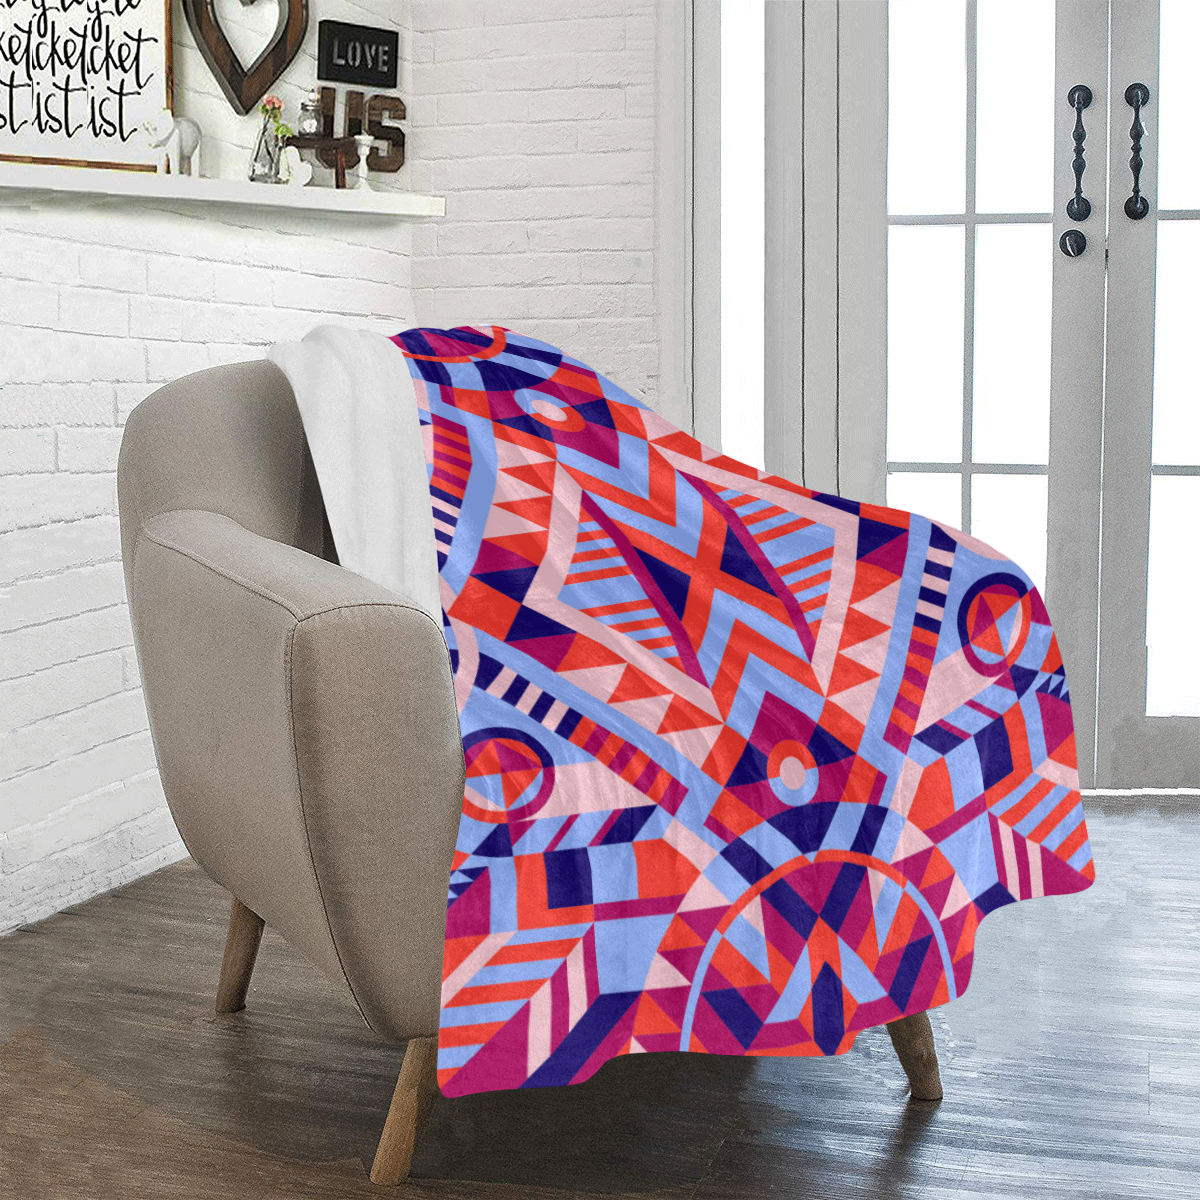 Modern Geometric Pattern Ultra-Soft Micro Fleece Blanket 40"x50"